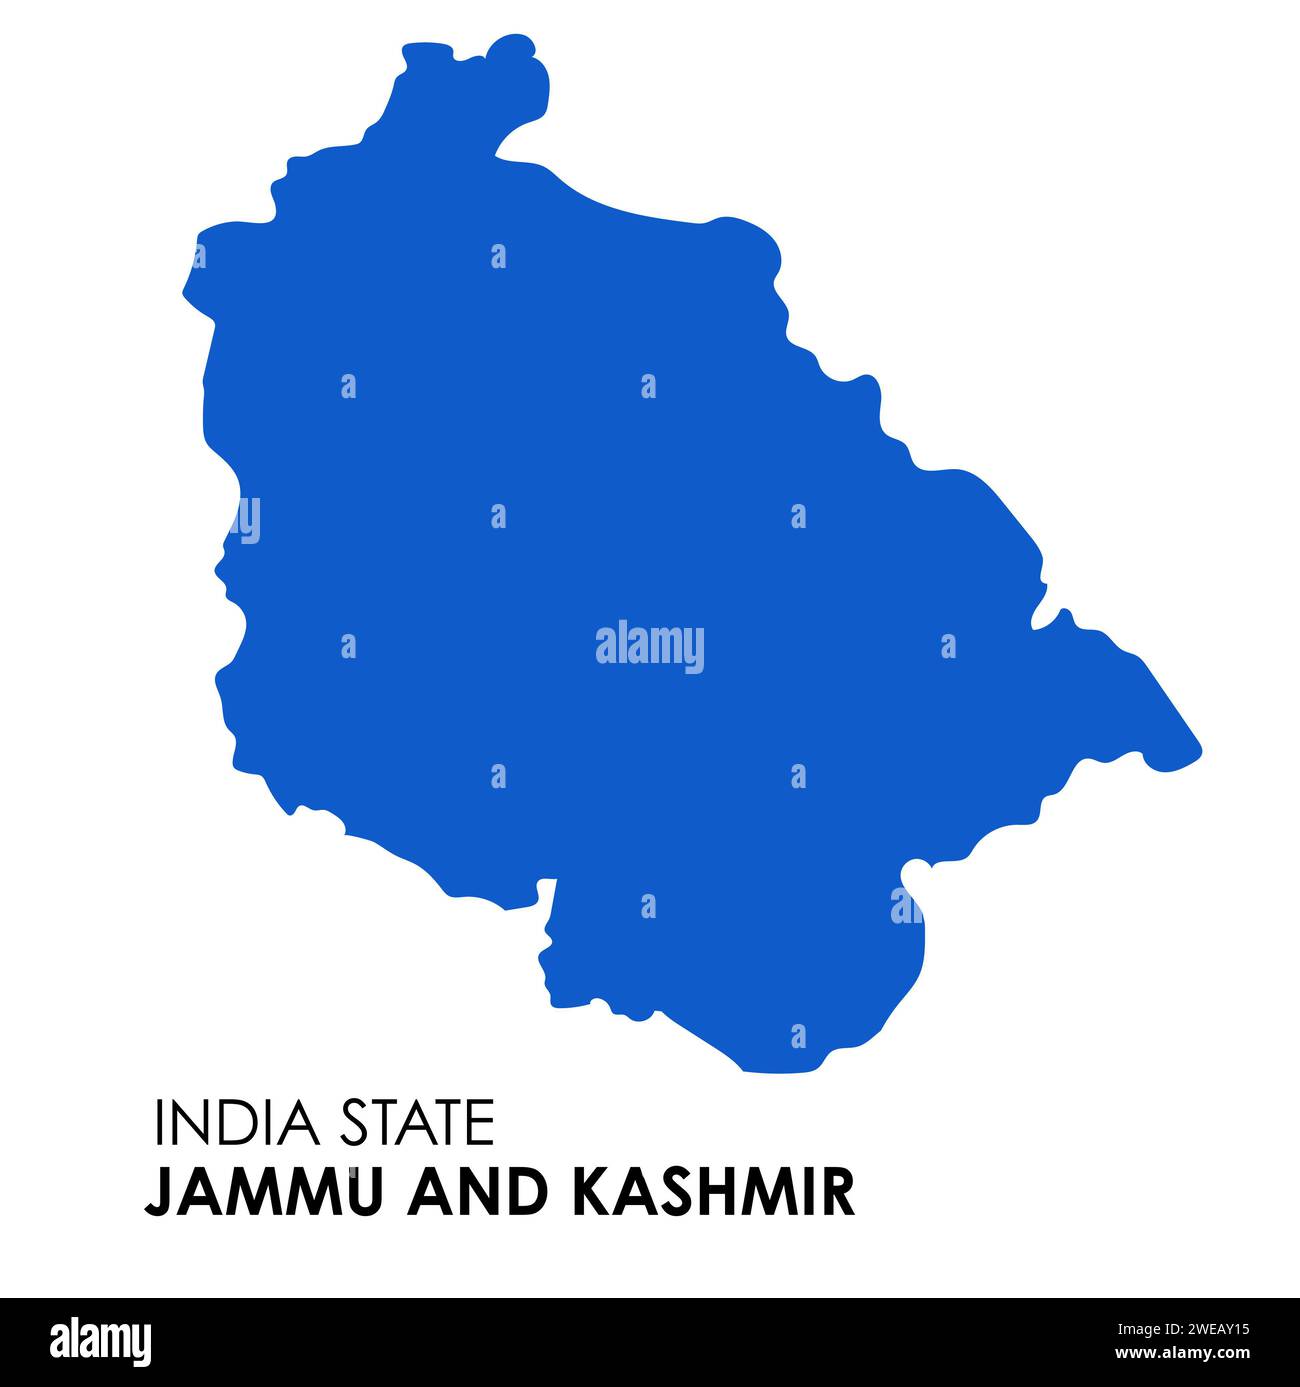 Jammu and kashmir map of Indian state. Jammu and kashmir map vector illustration. Stock Photo